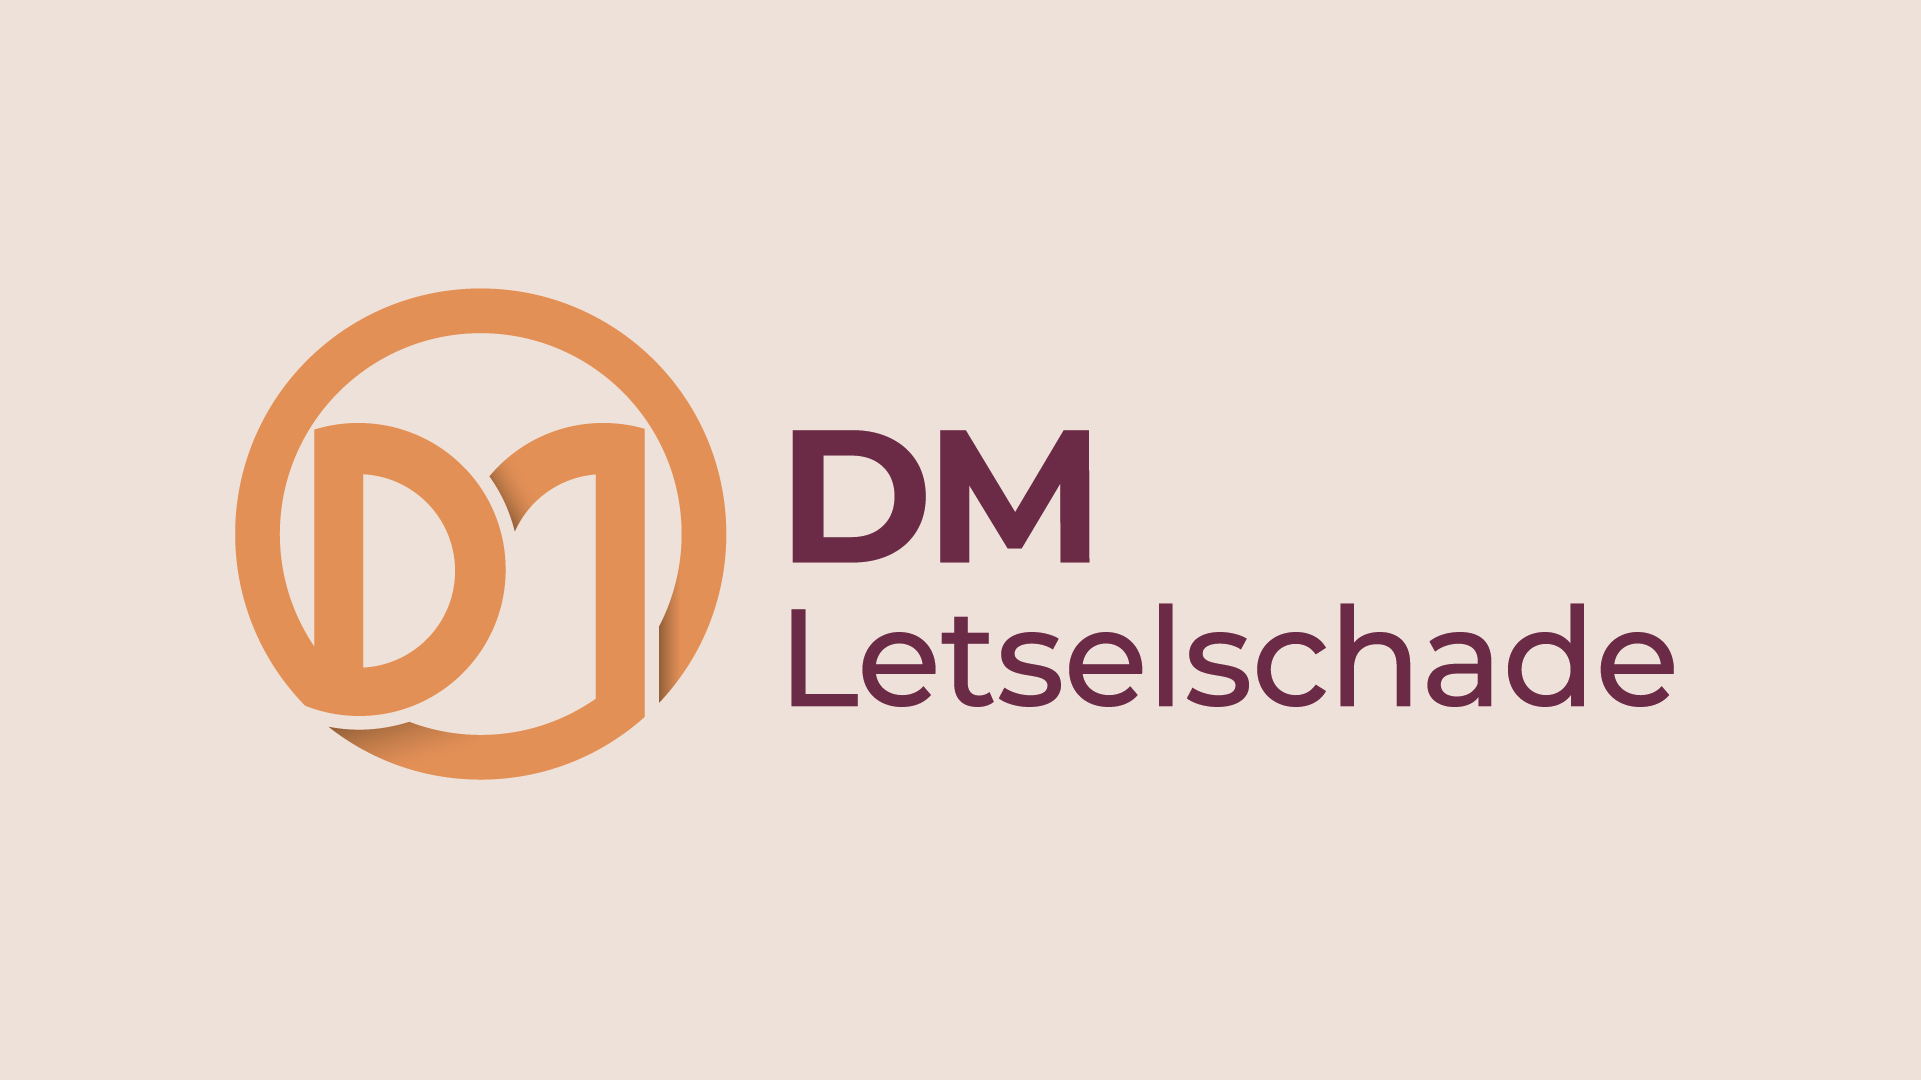 DM Letselschade logo 2